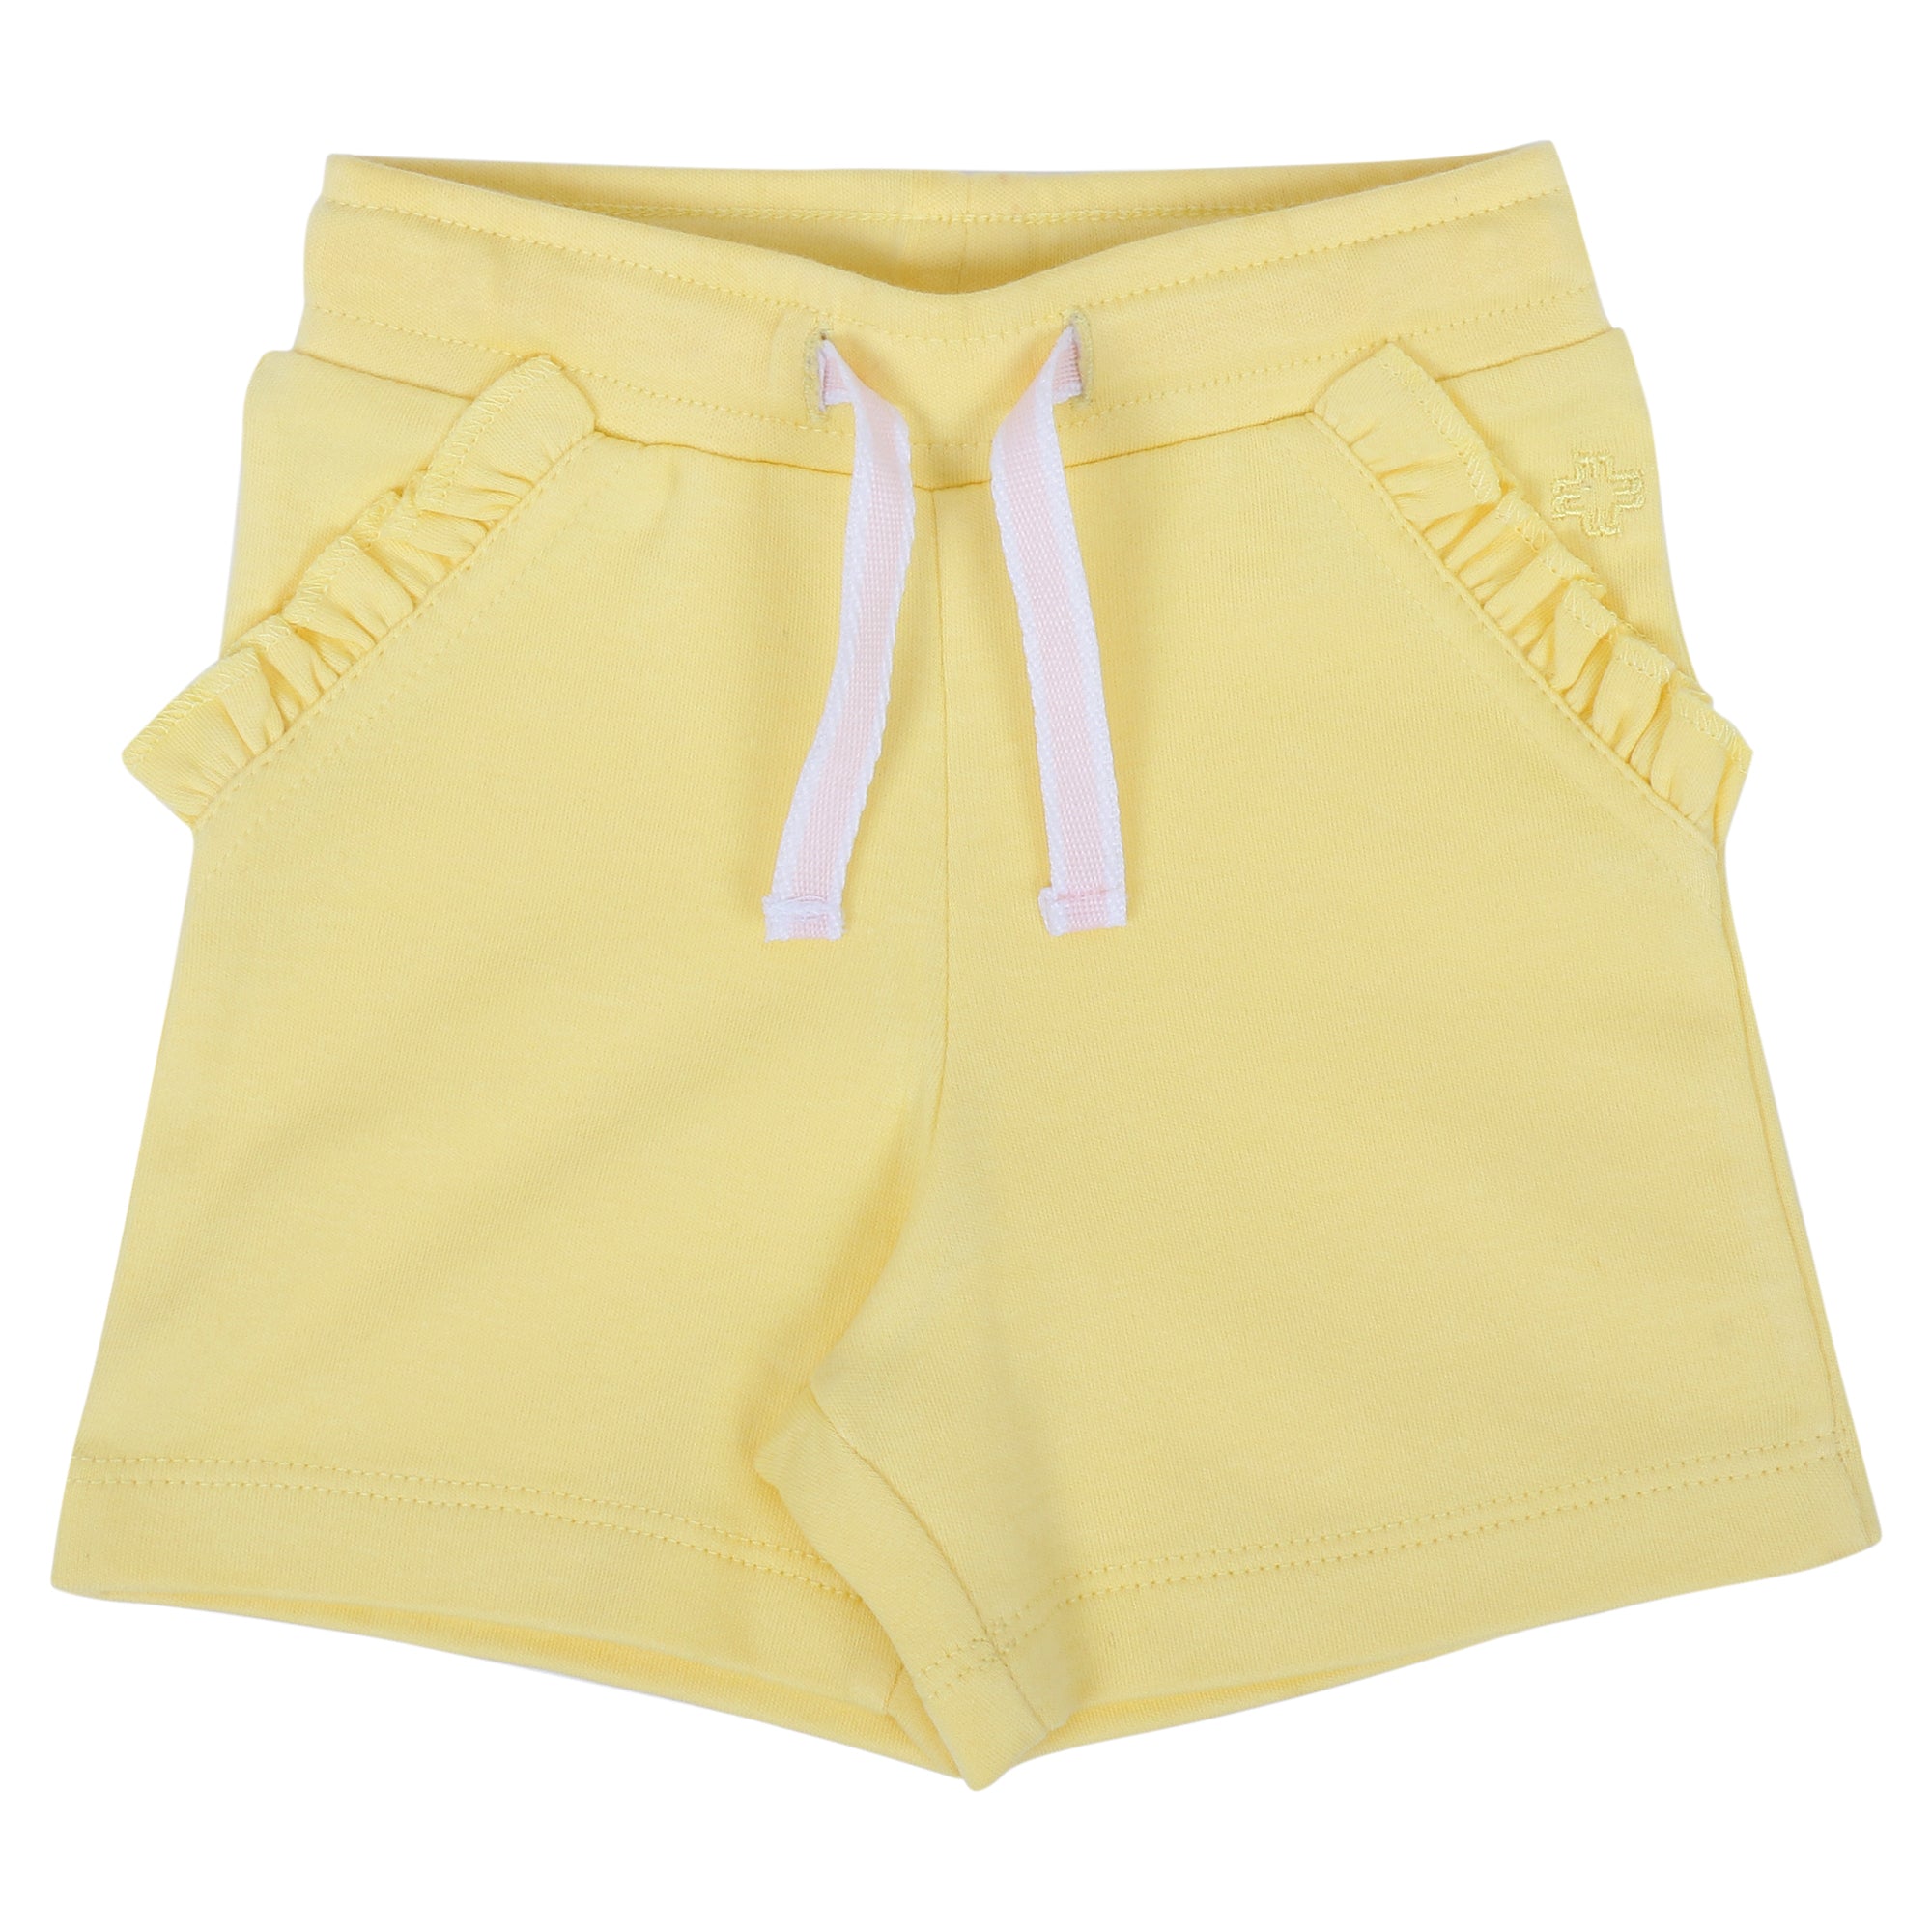 My Milestones Shorts - Peach Daisy / Yellow- 2 Pc Pack